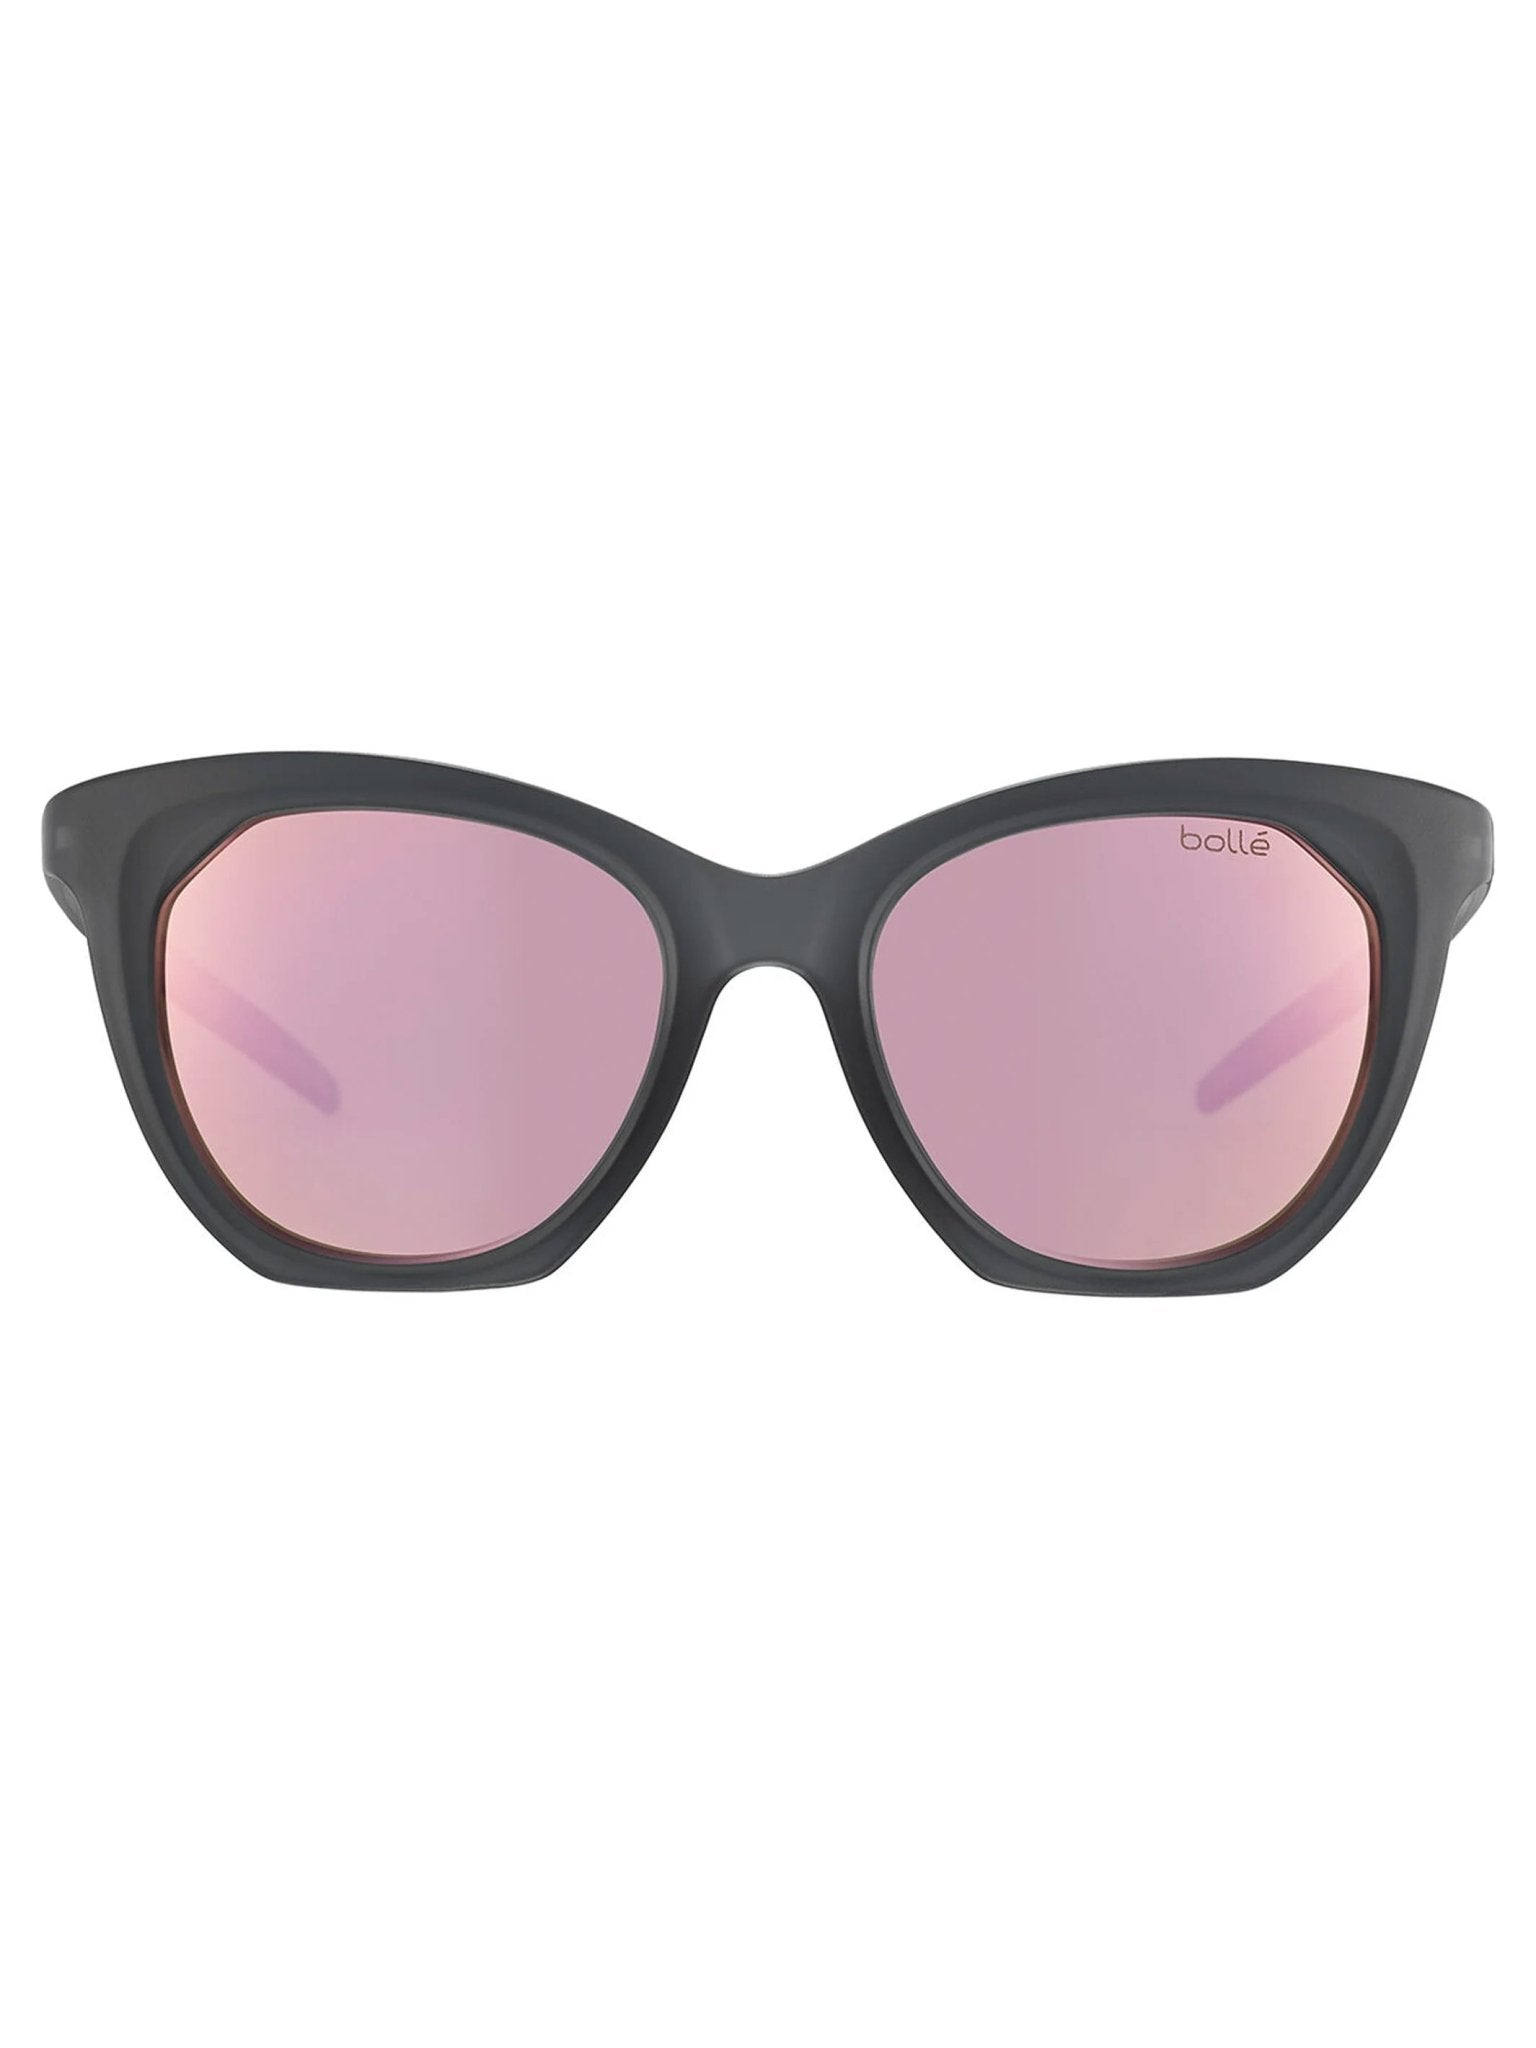 4elementsclothingBolléBolle - PRIZE Sunglasses Black Crystal Matte - 1 Brown Pink PolarisedsunglassesBS029003